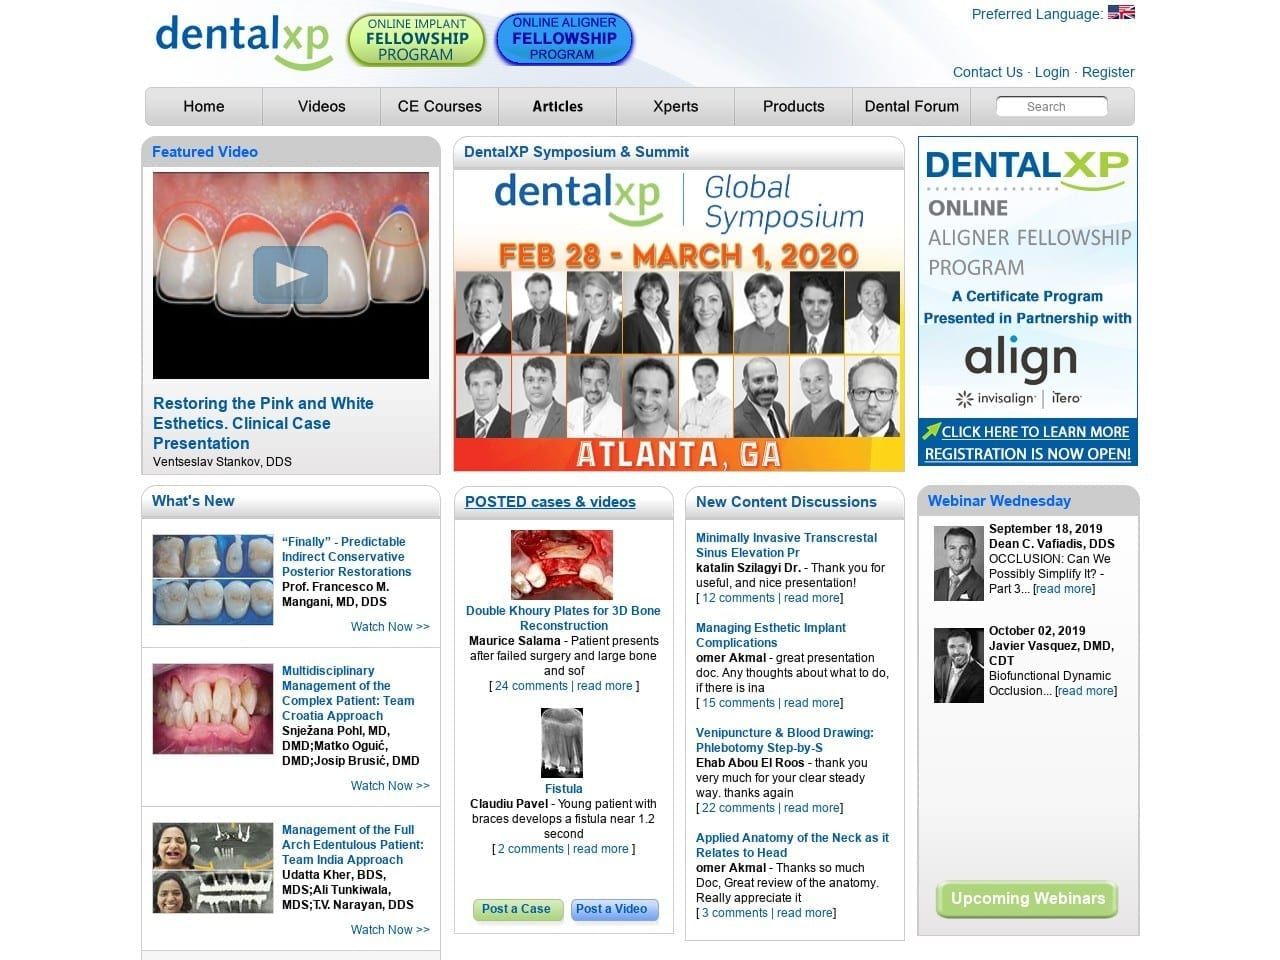 Dr. Michael Toffler DDS Website Screenshot from dentalxp.com